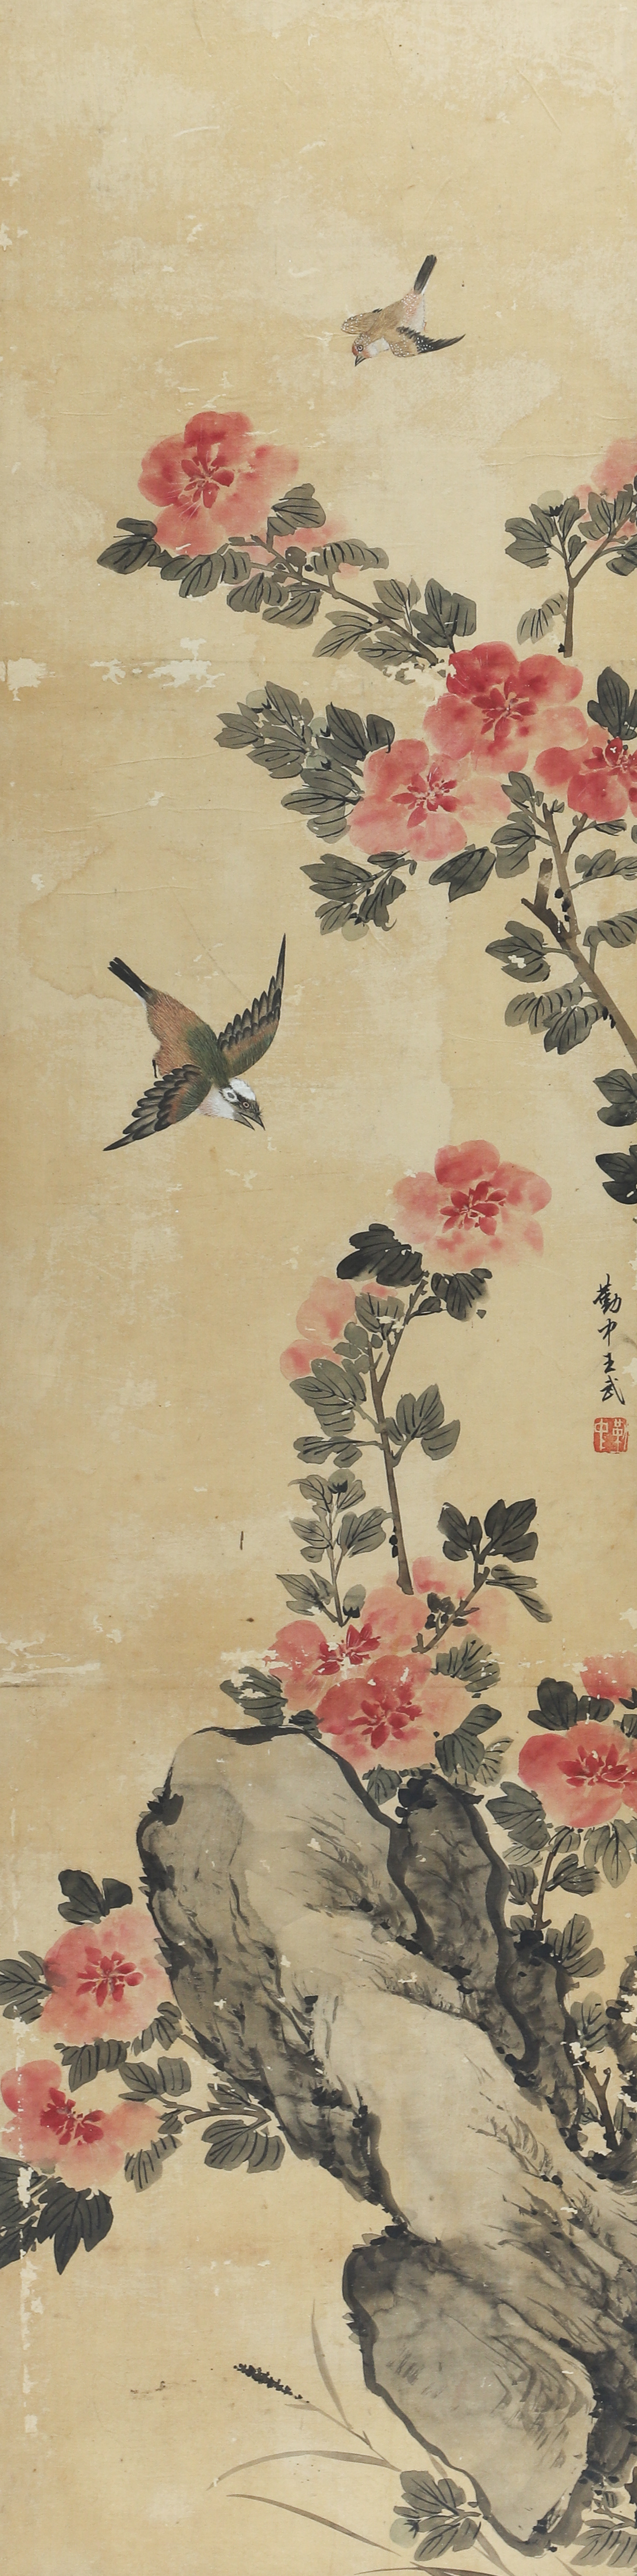 Chinese scroll flowers birds  3ca917